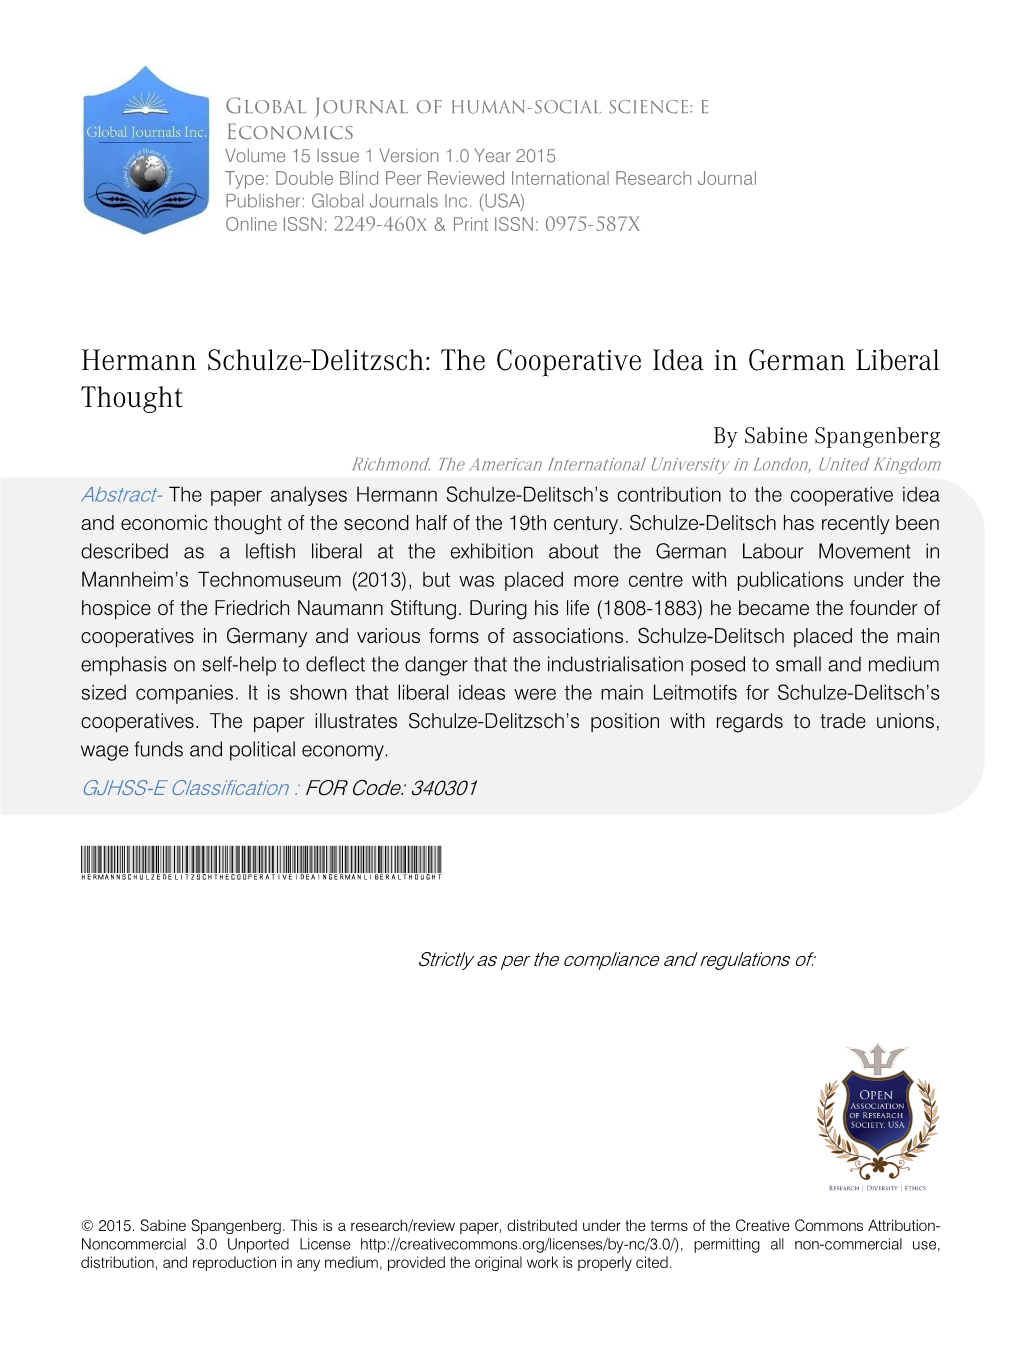 Hermann Schulze-Delitzsch: the Cooperative Idea in German Liberal Thought by Sabine Spangenberg Richmond